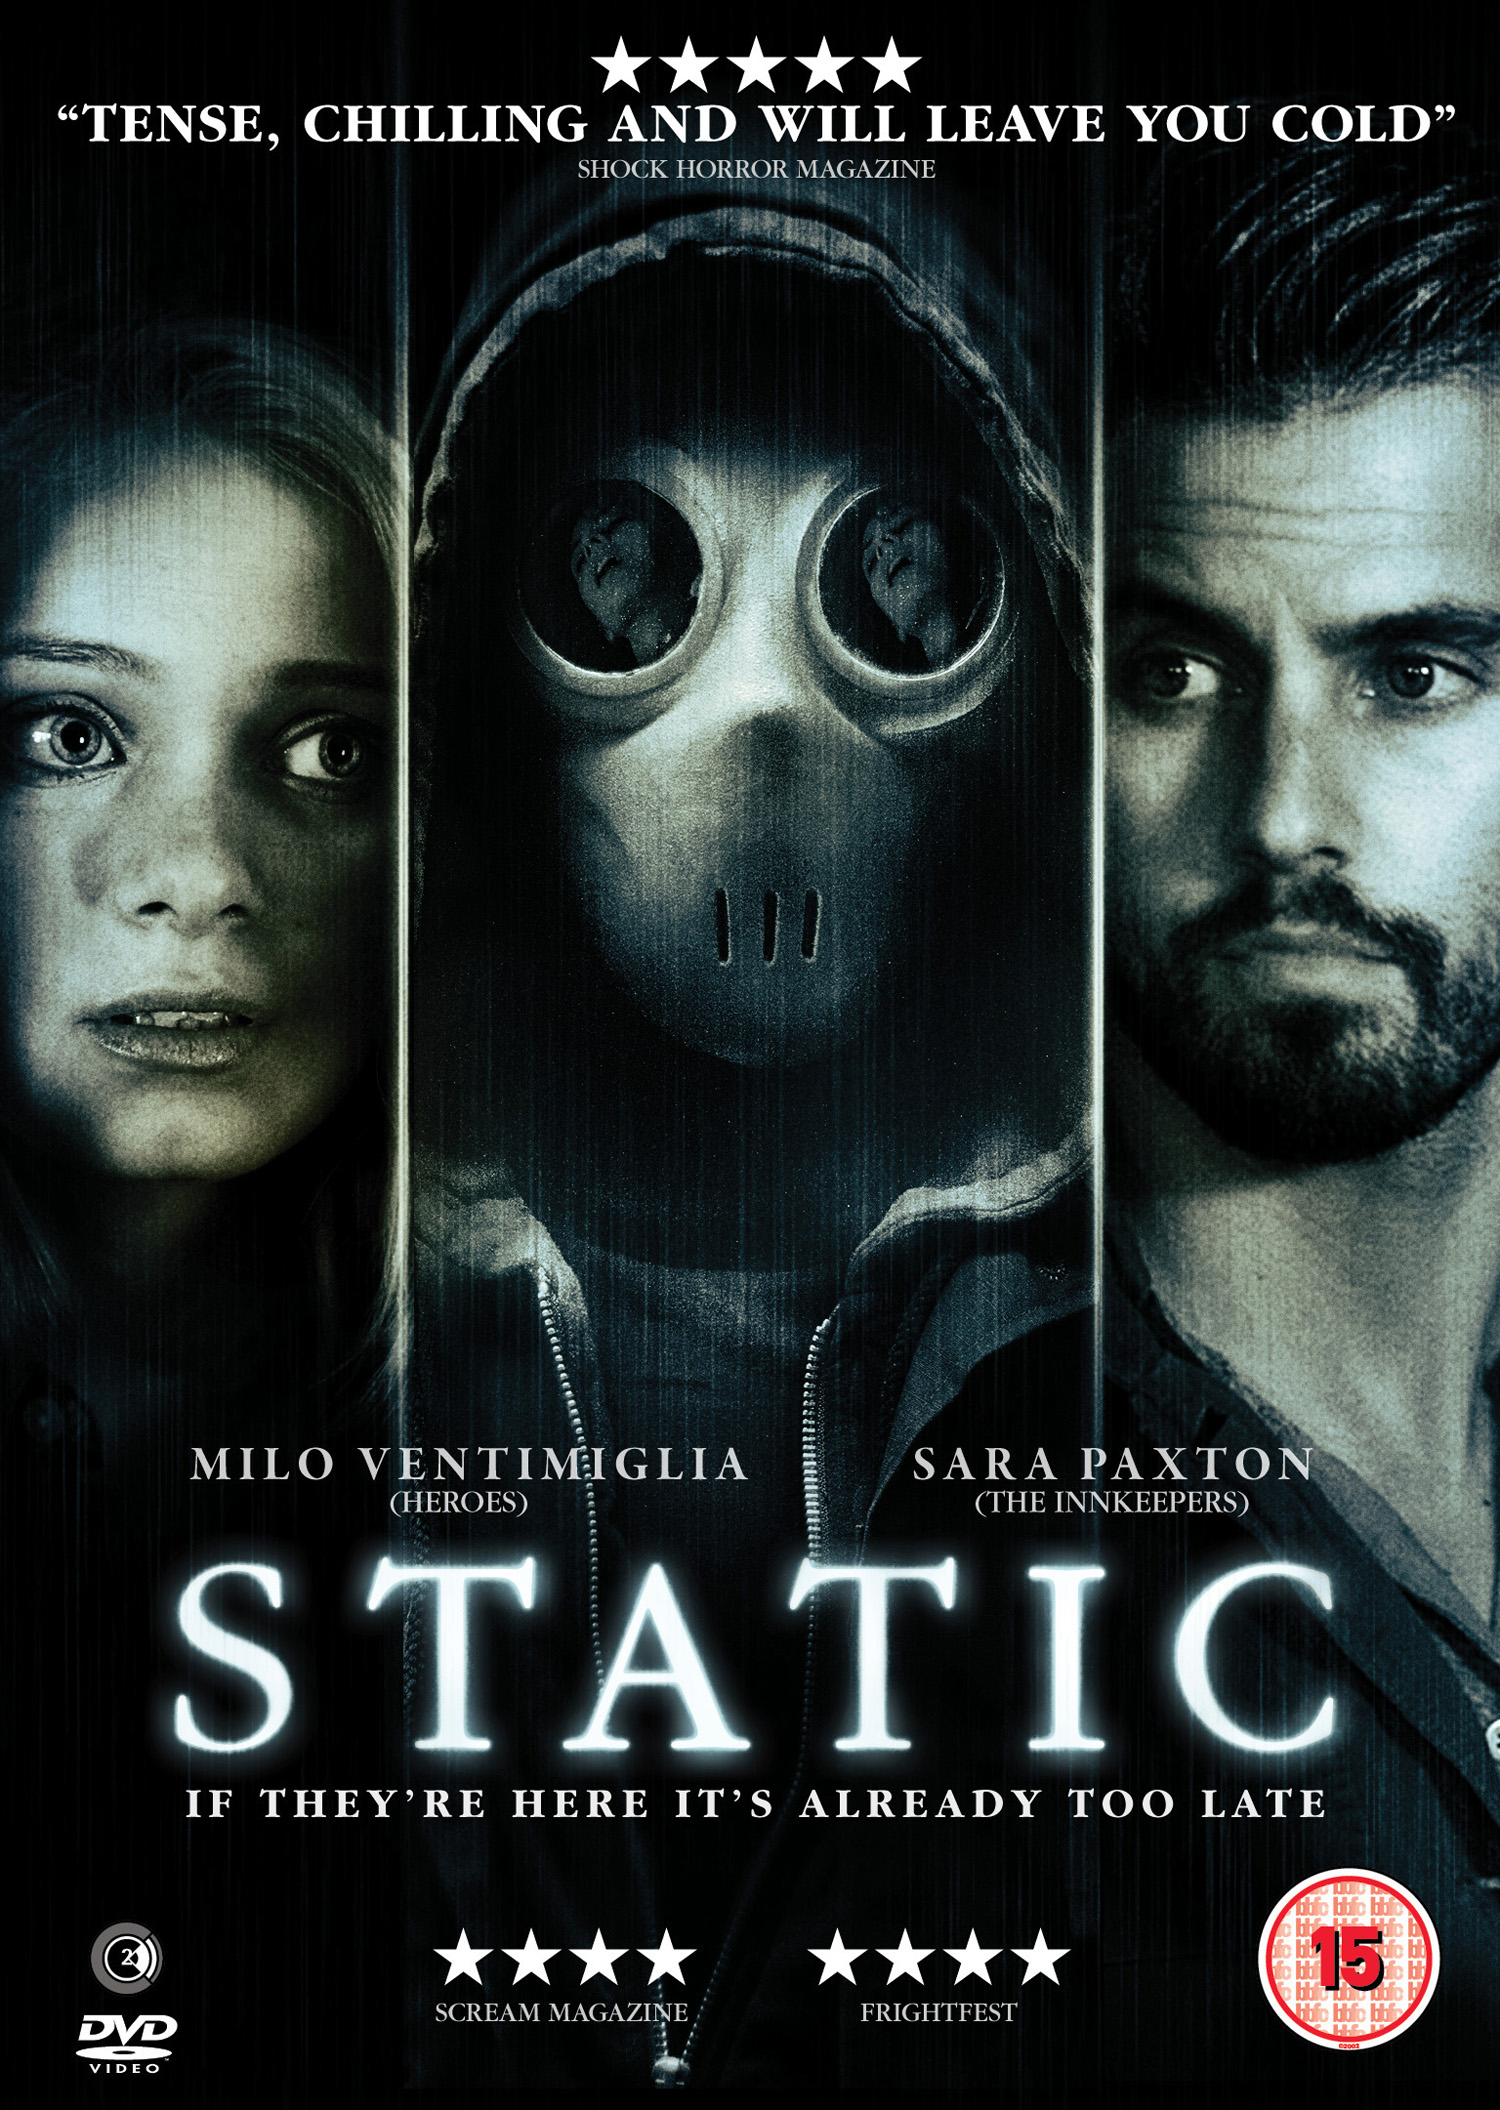 Static - Nincs menekvés